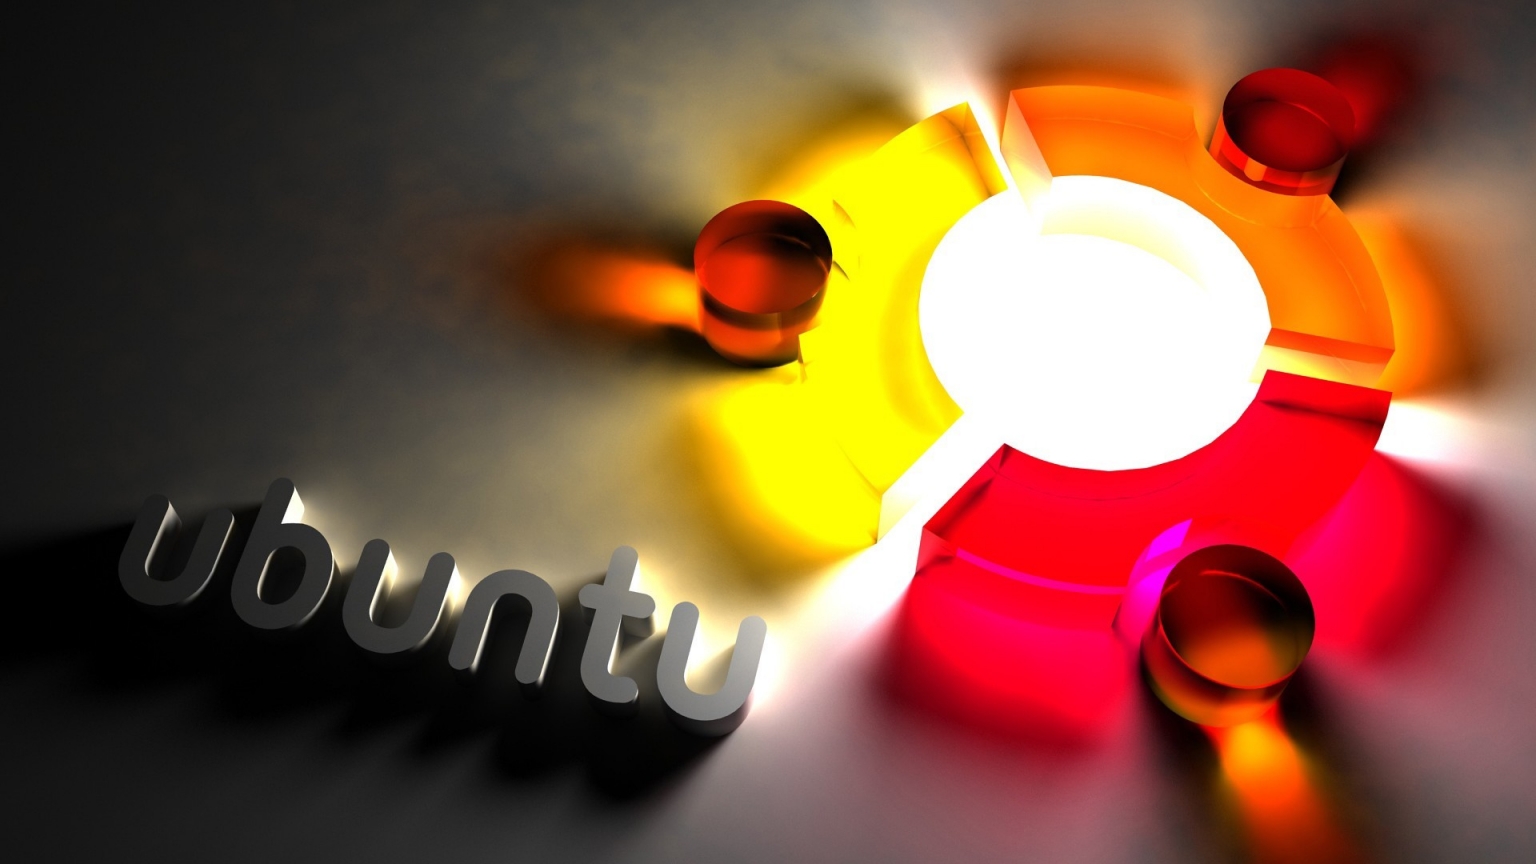 Ubuntu Cool Logo for 1536 x 864 HDTV resolution